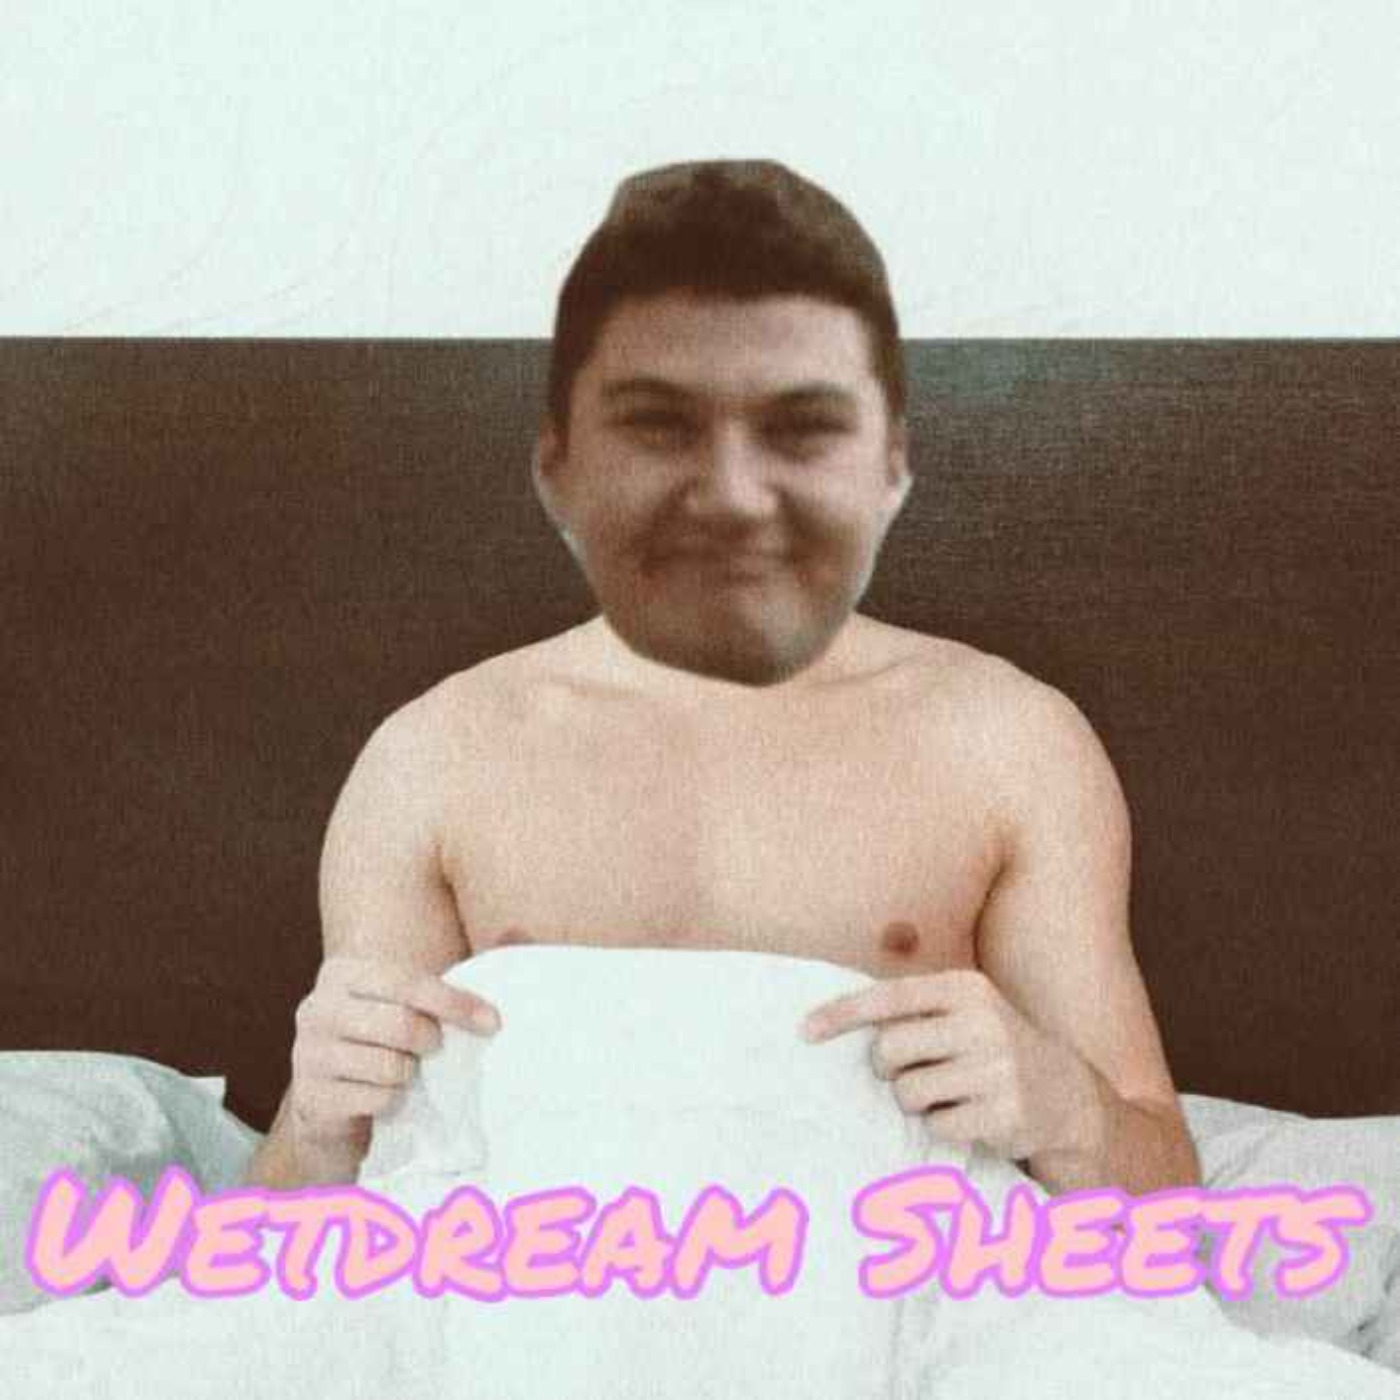 Episode 2.4: Wetdream Sheets